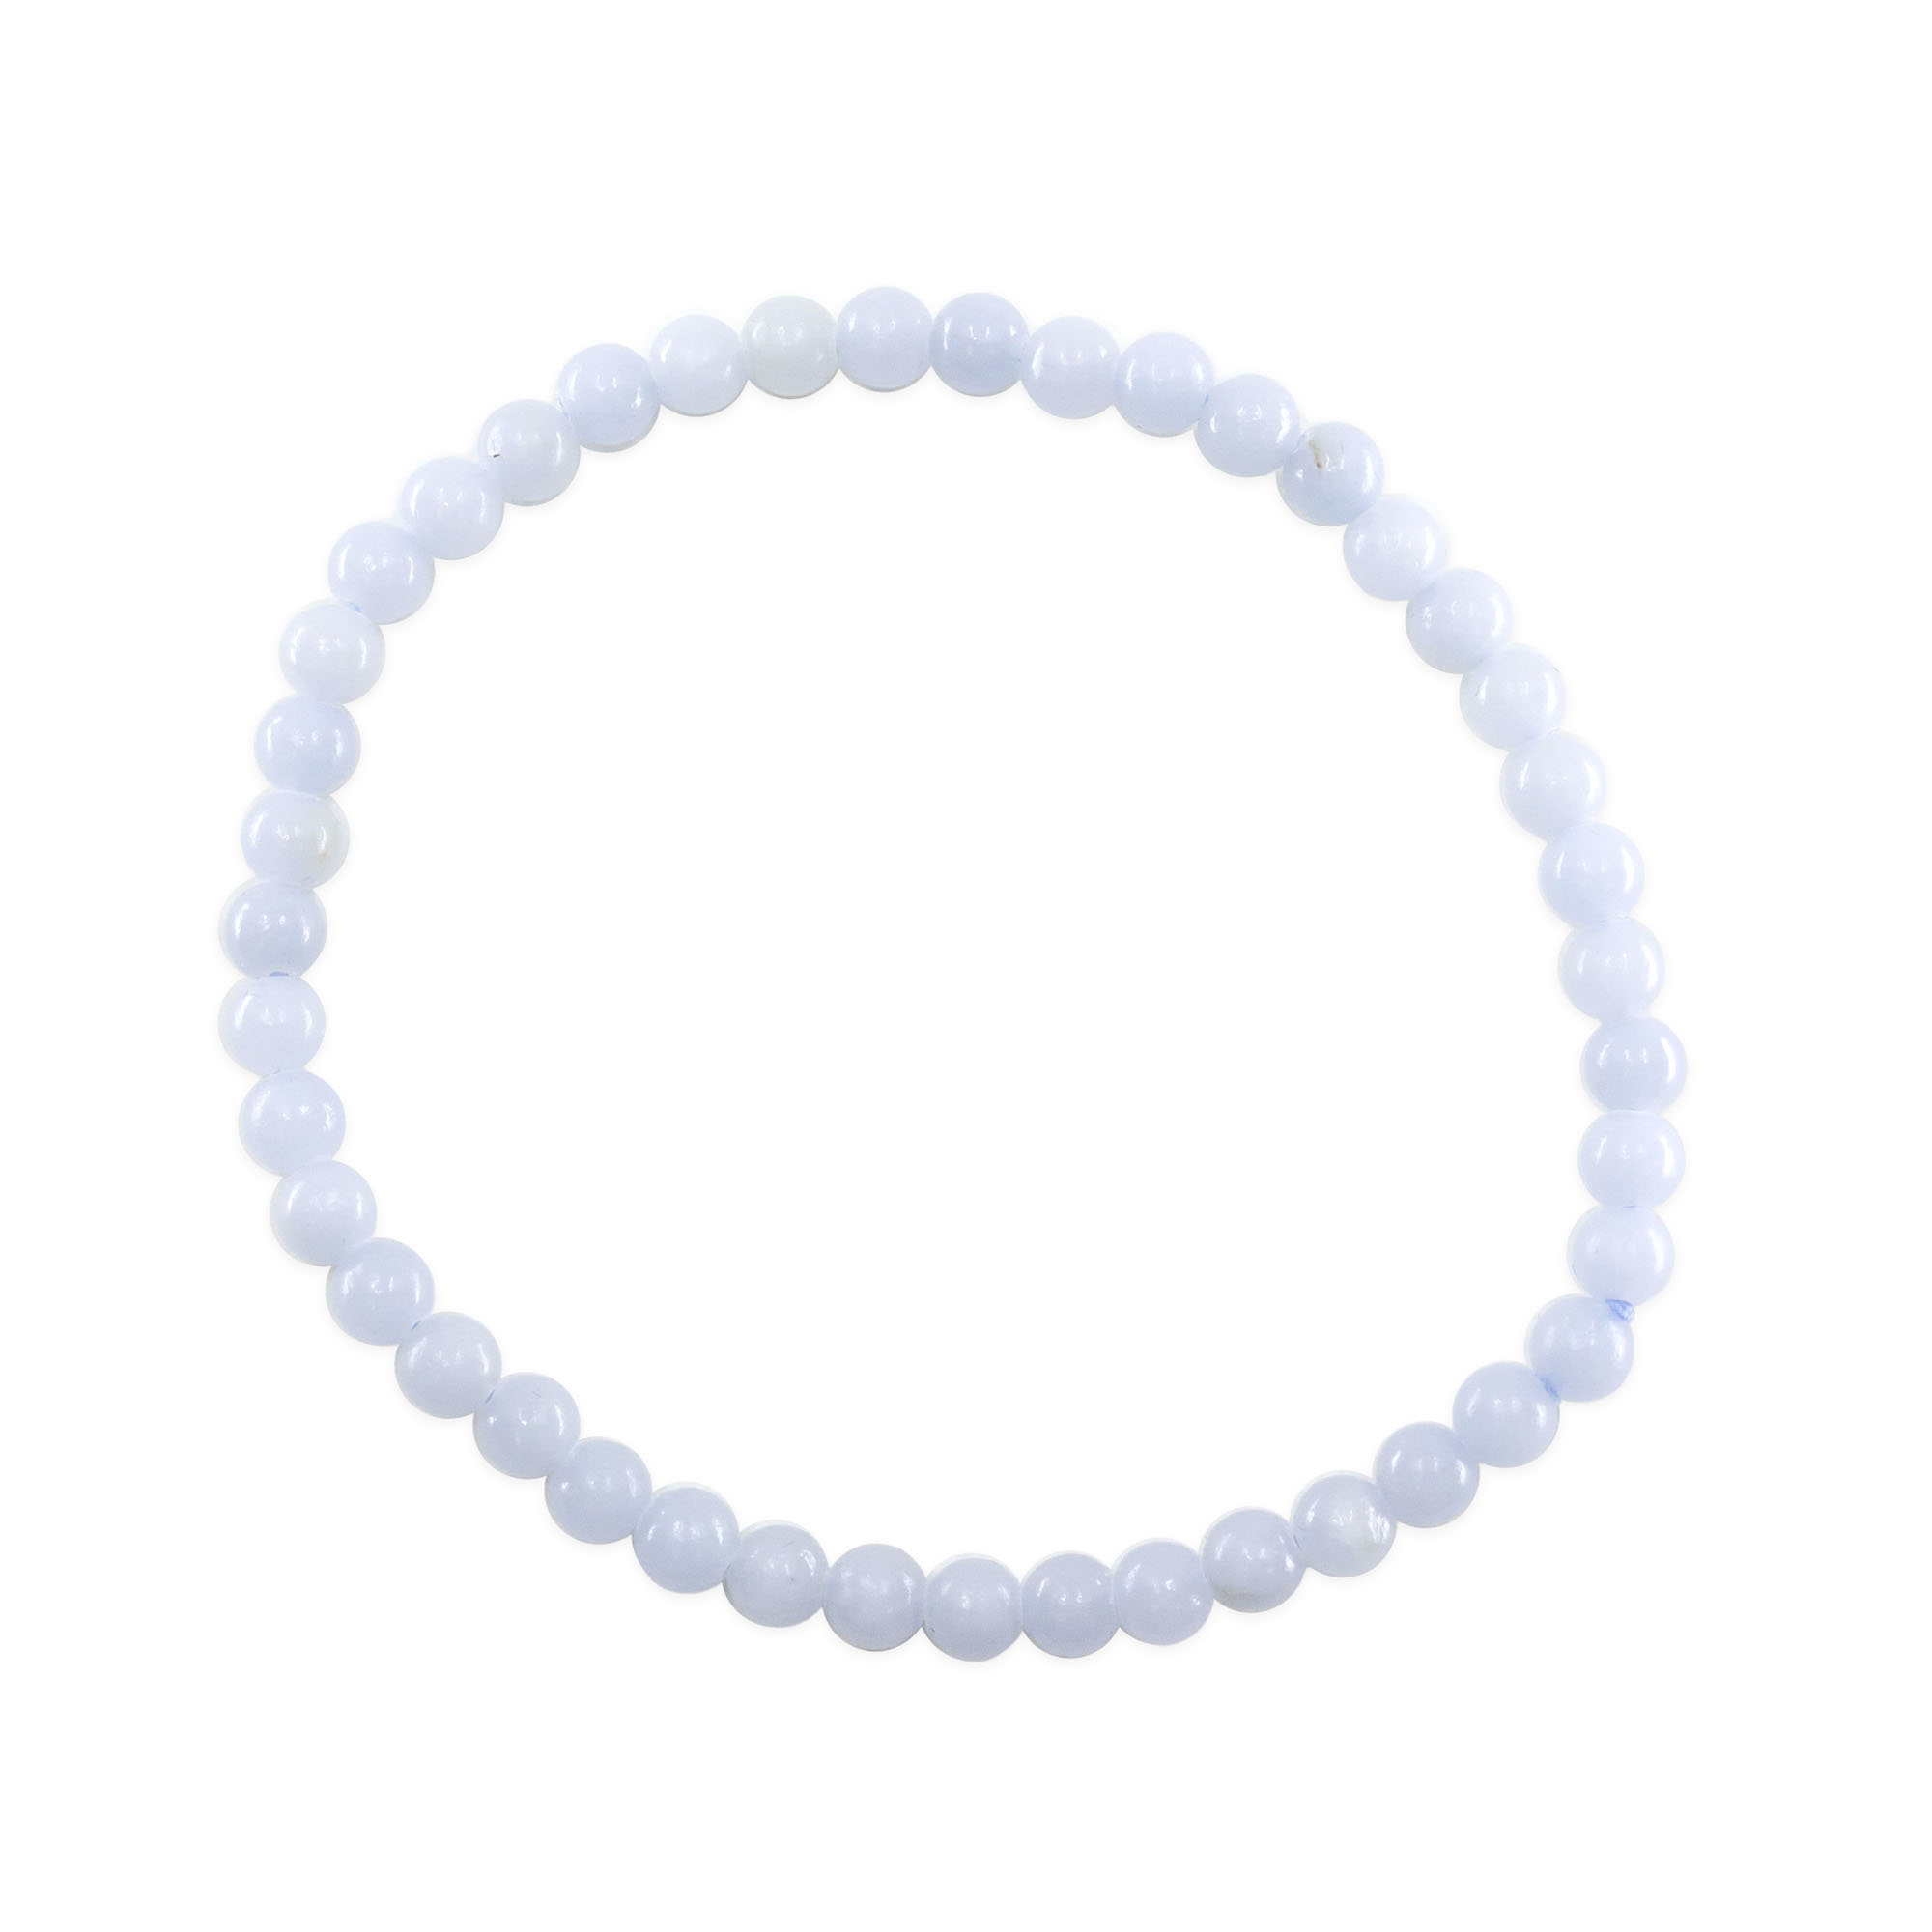 Aquarius Zodiac Bracelet: White Silver Letter Beads and rhodonite stone  beads